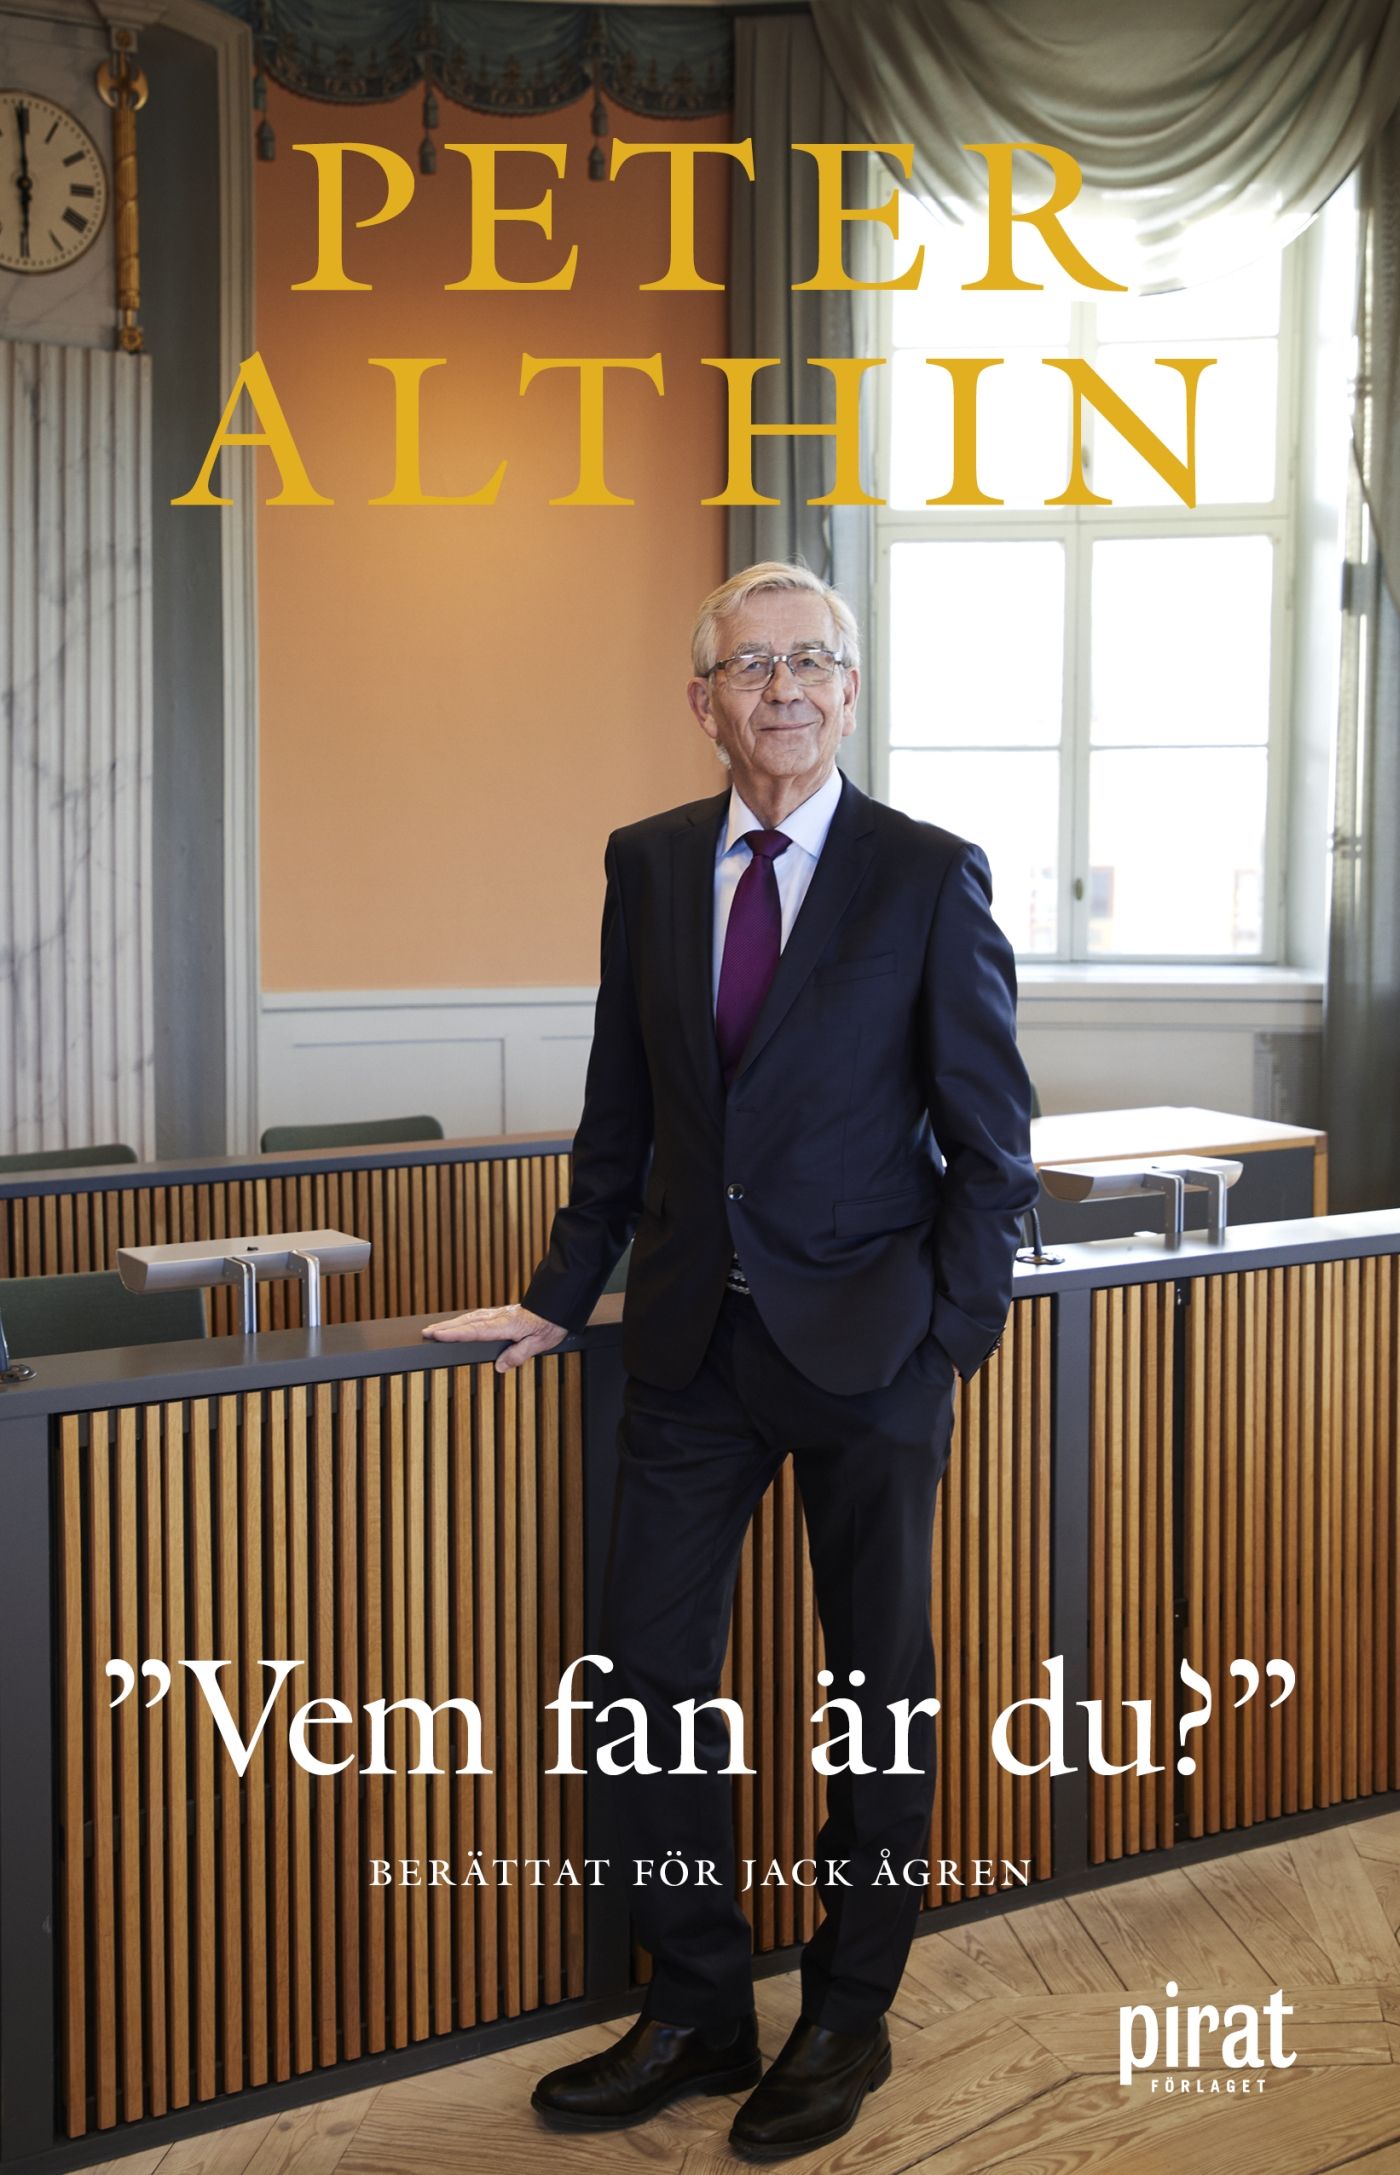 Vem fan är du?, e-bok av Peter Althin, Jack Ågren